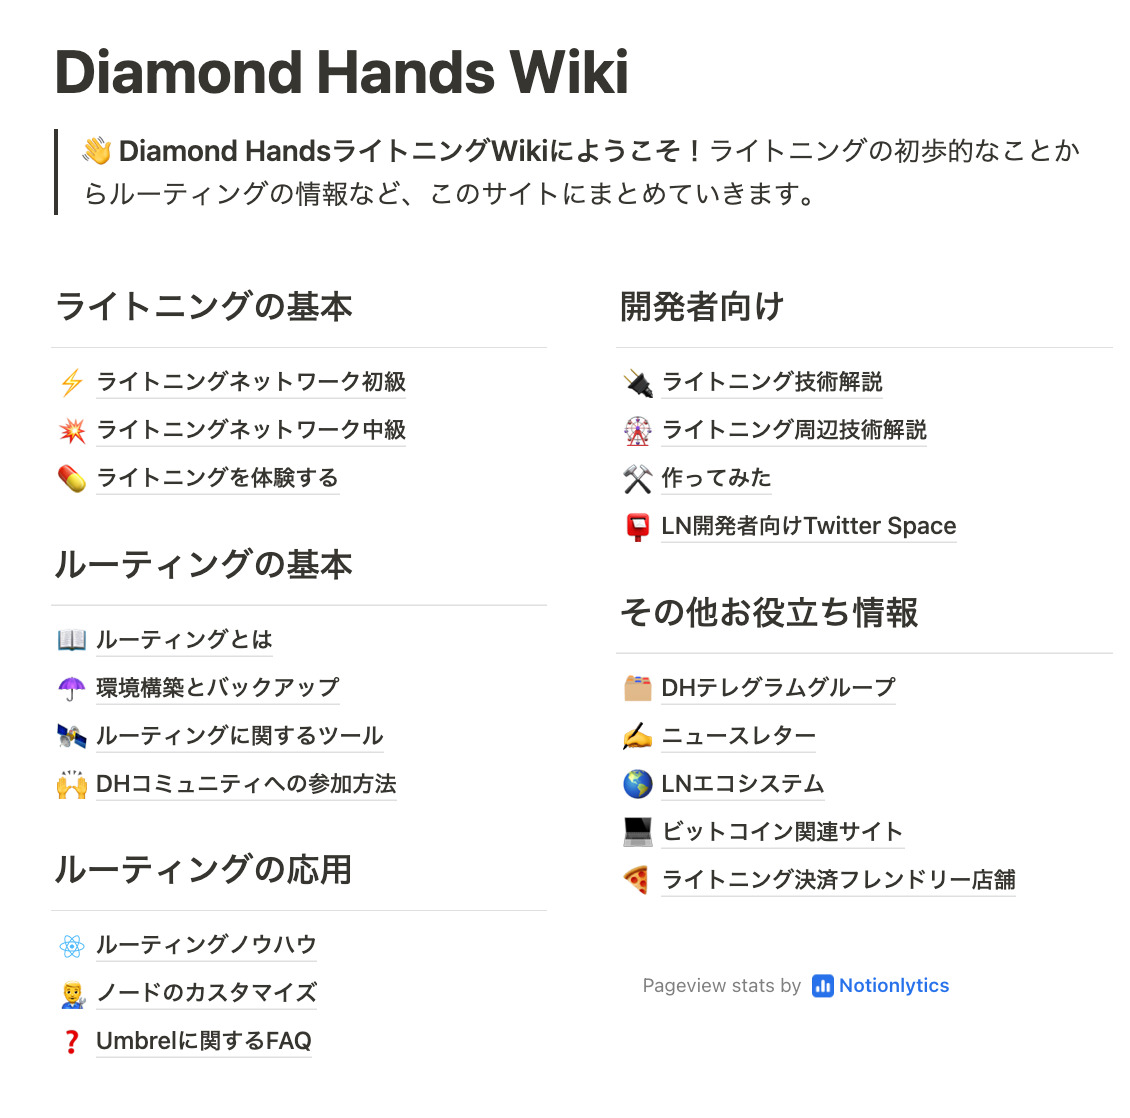 Diamond Hands Wiki contents